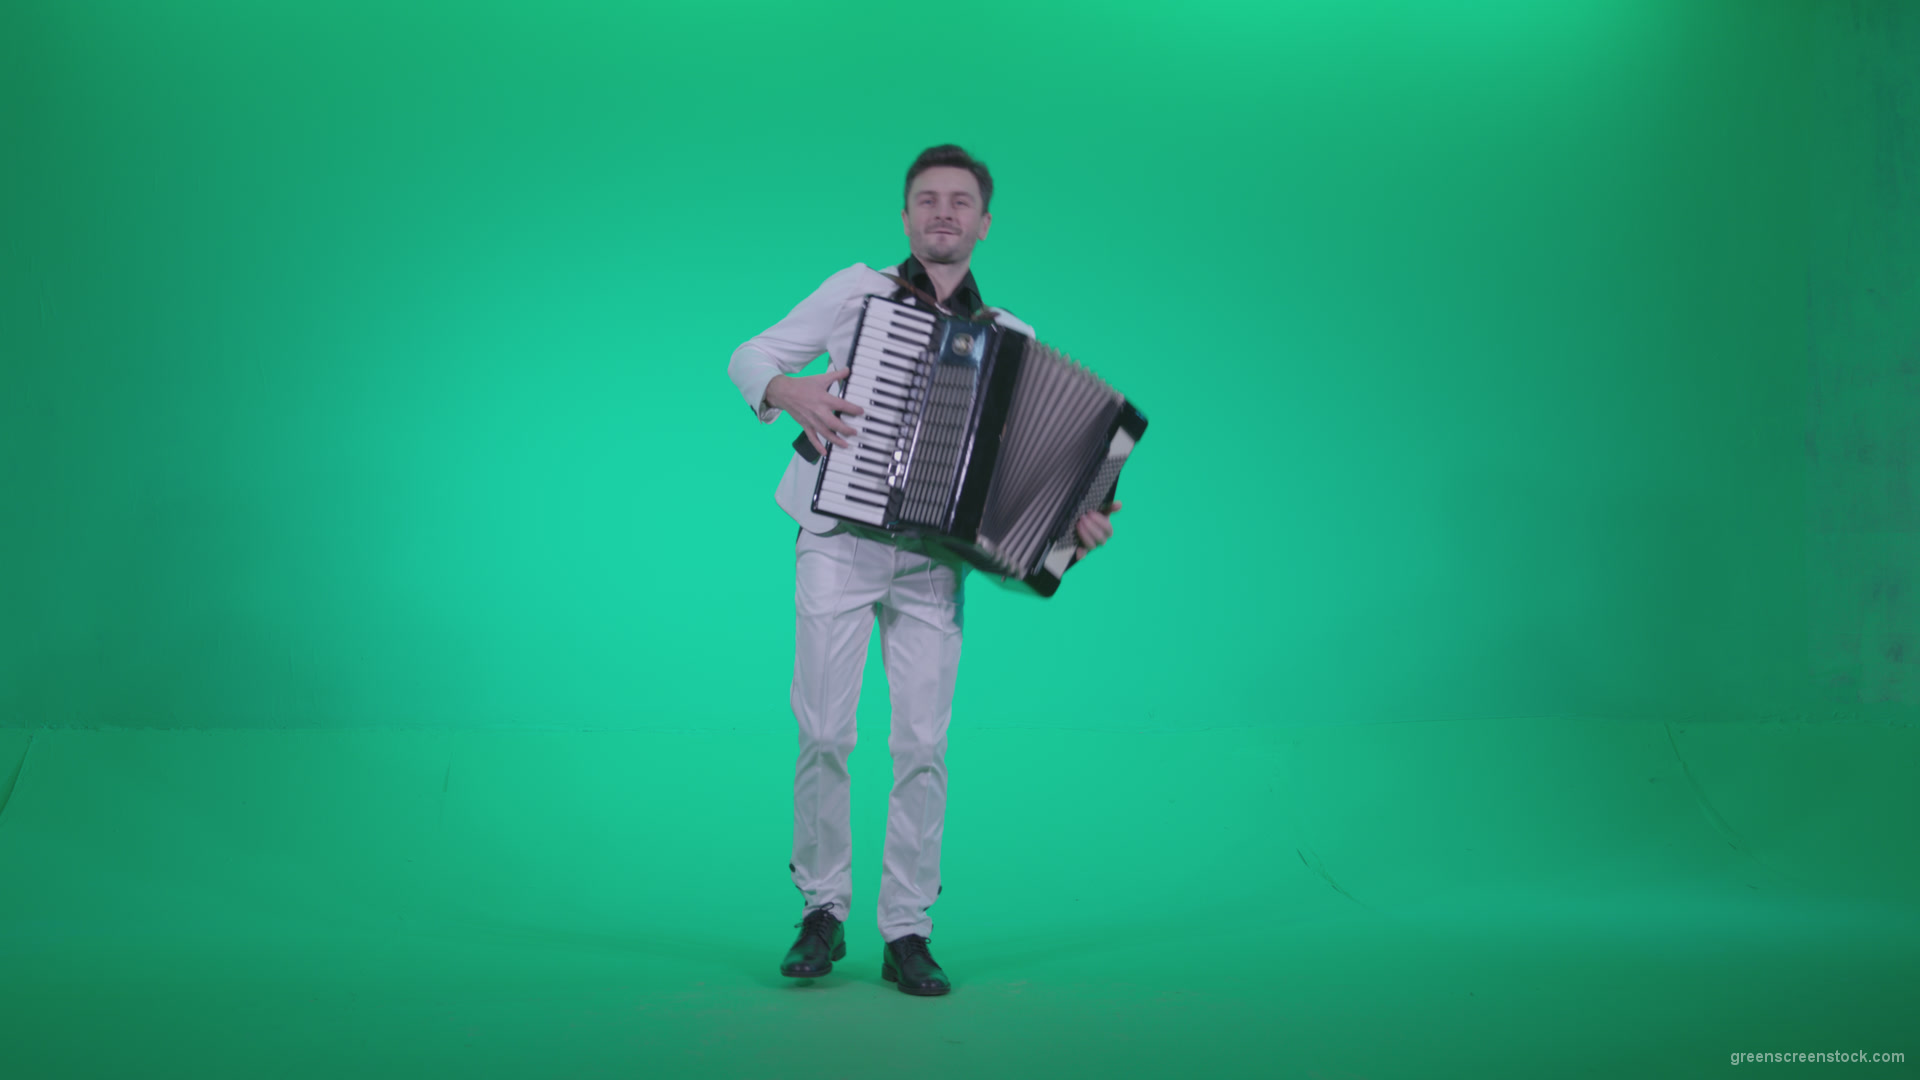 Black-Accordion-Virtuoso-performs-ba9-Green-Screen-Video-Footage_005 Green Screen Stock